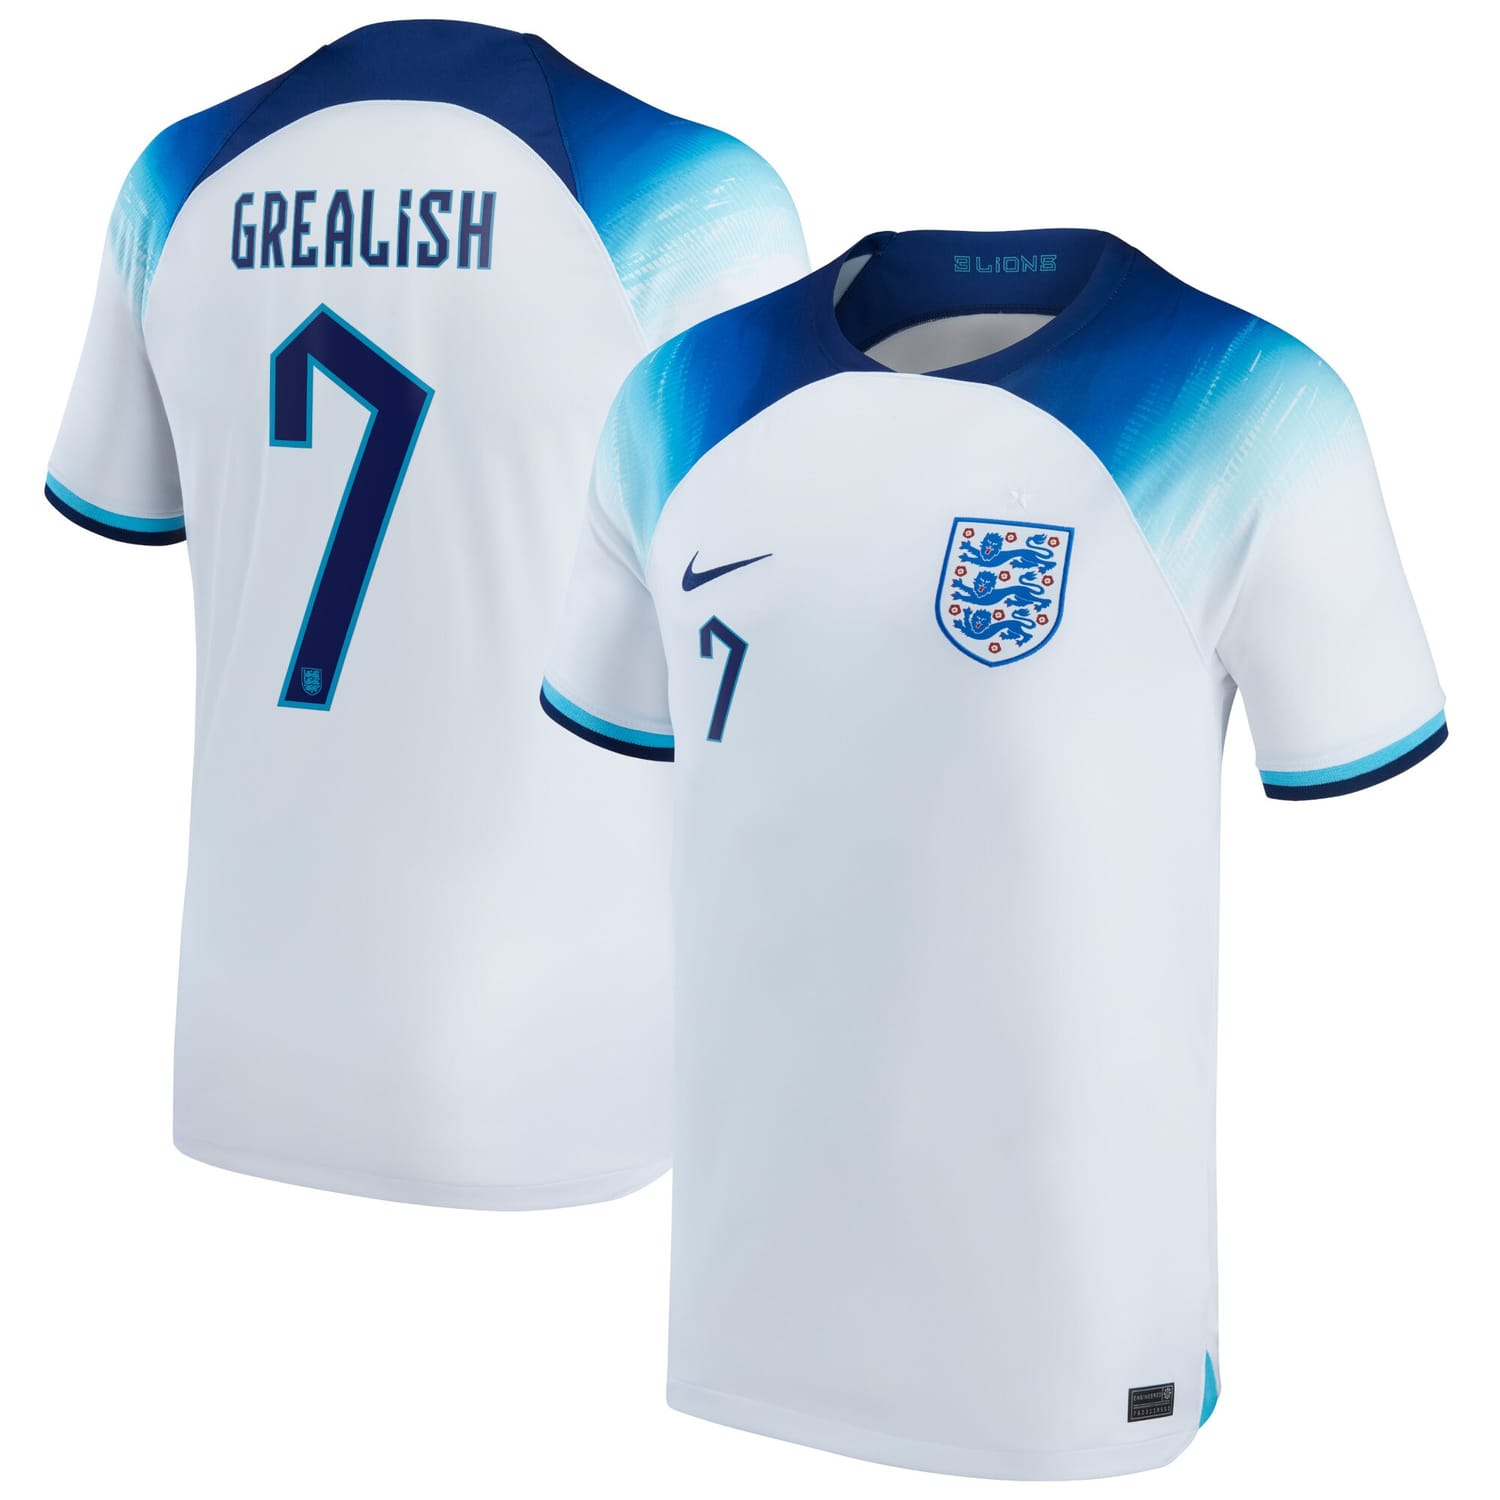 England National Team Home Jersey Shirt 2022 player Jack Grealish 7 printing for Men